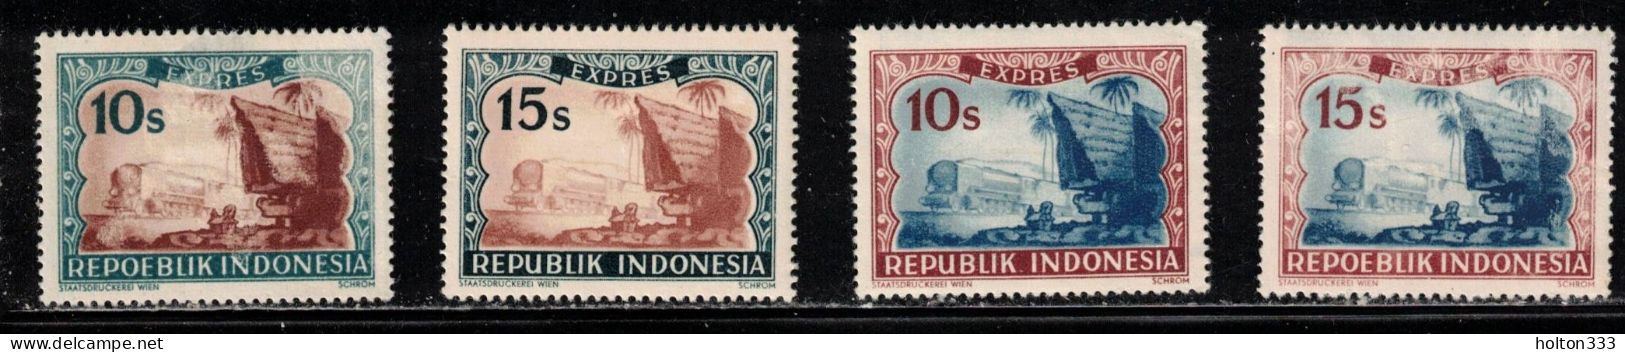 INDONESIA Scott # E1, E1A, E1B, E1C MH - Special Delivery Stamps - Indonesien